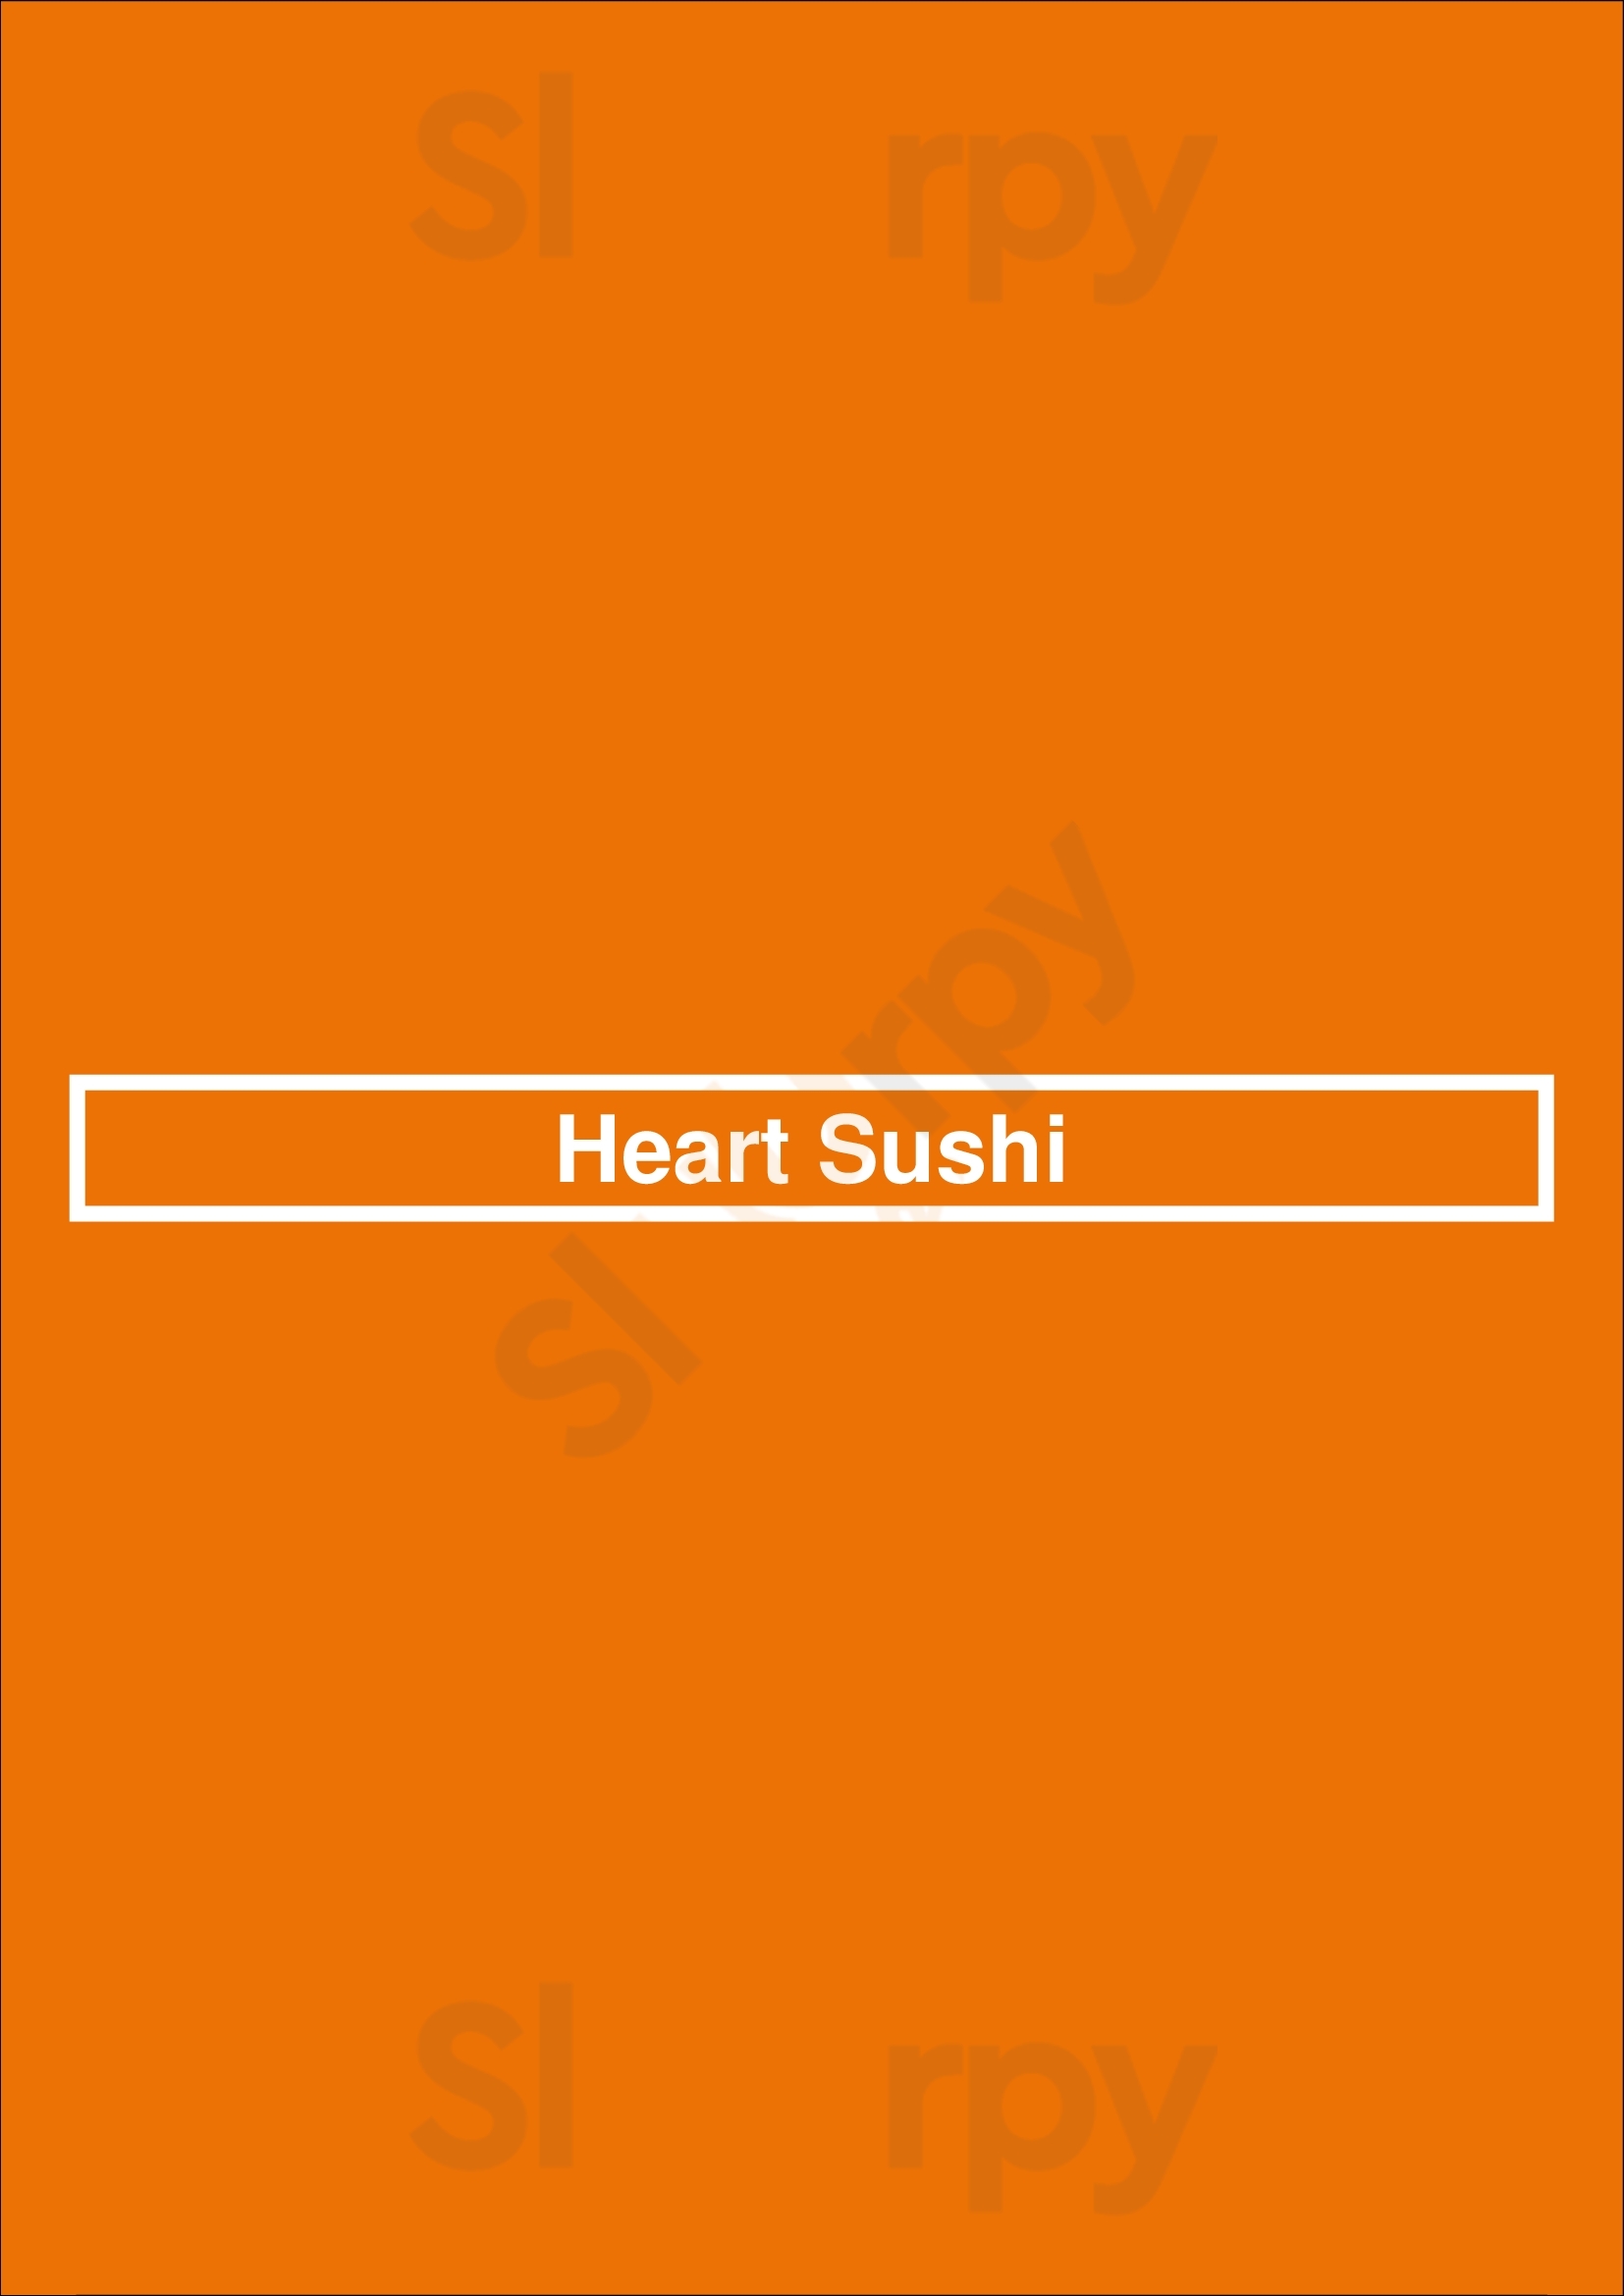 Heart Sushi Mississauga Menu - 1